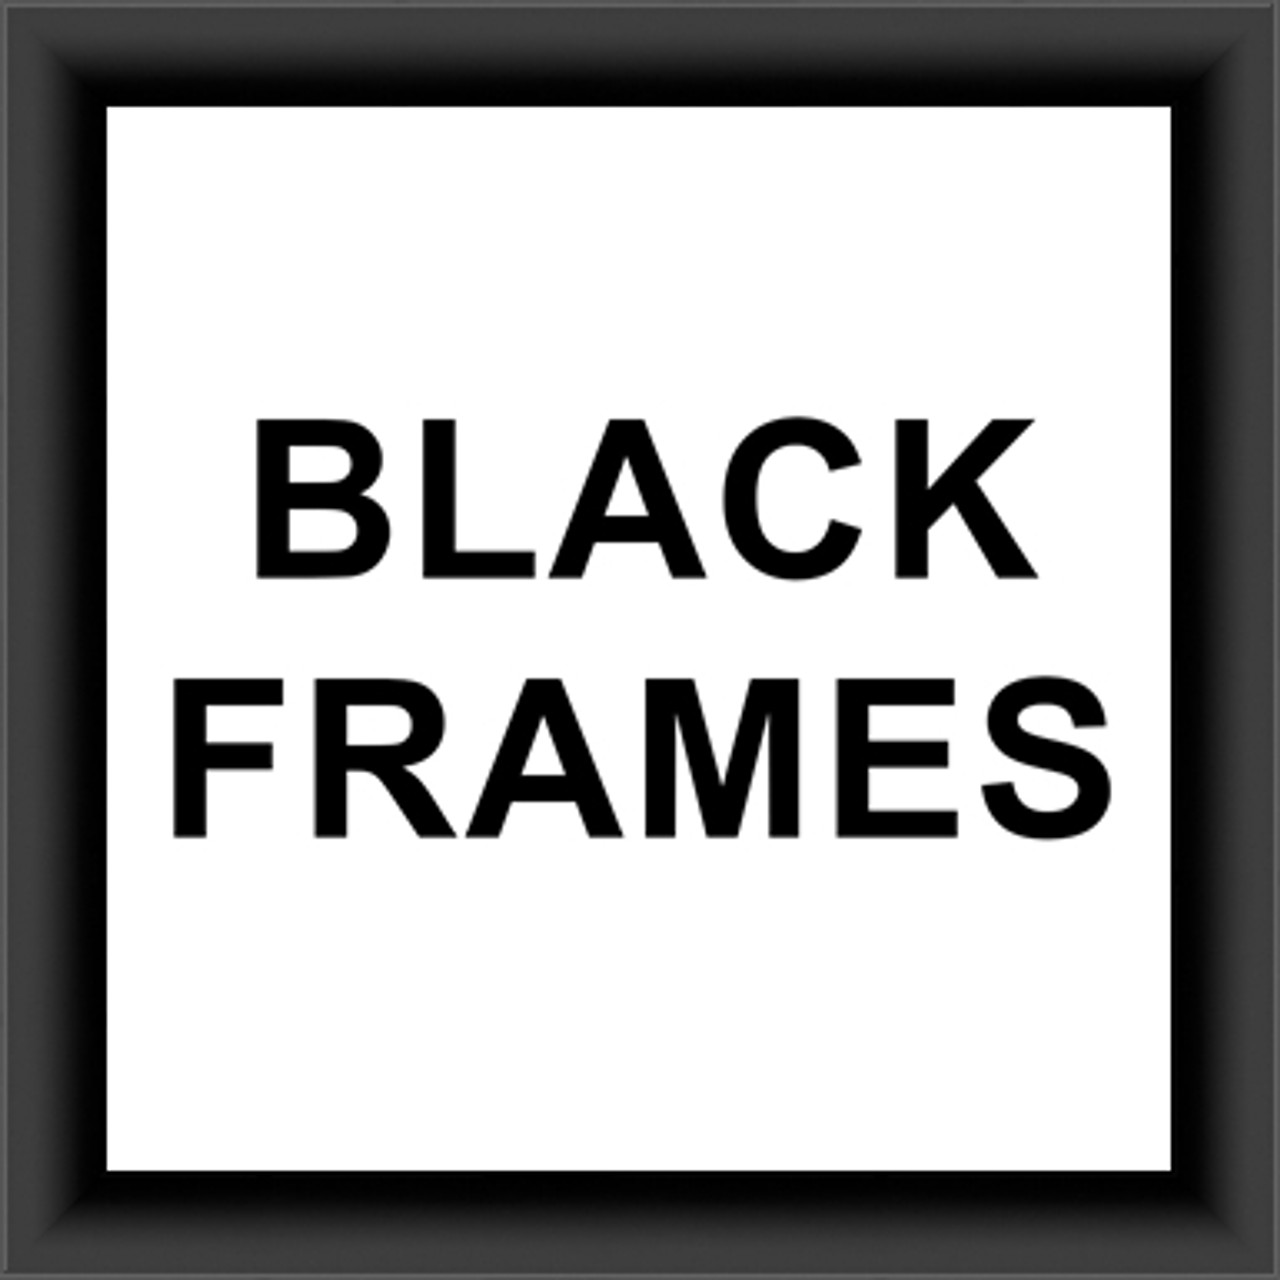 black frames for posters